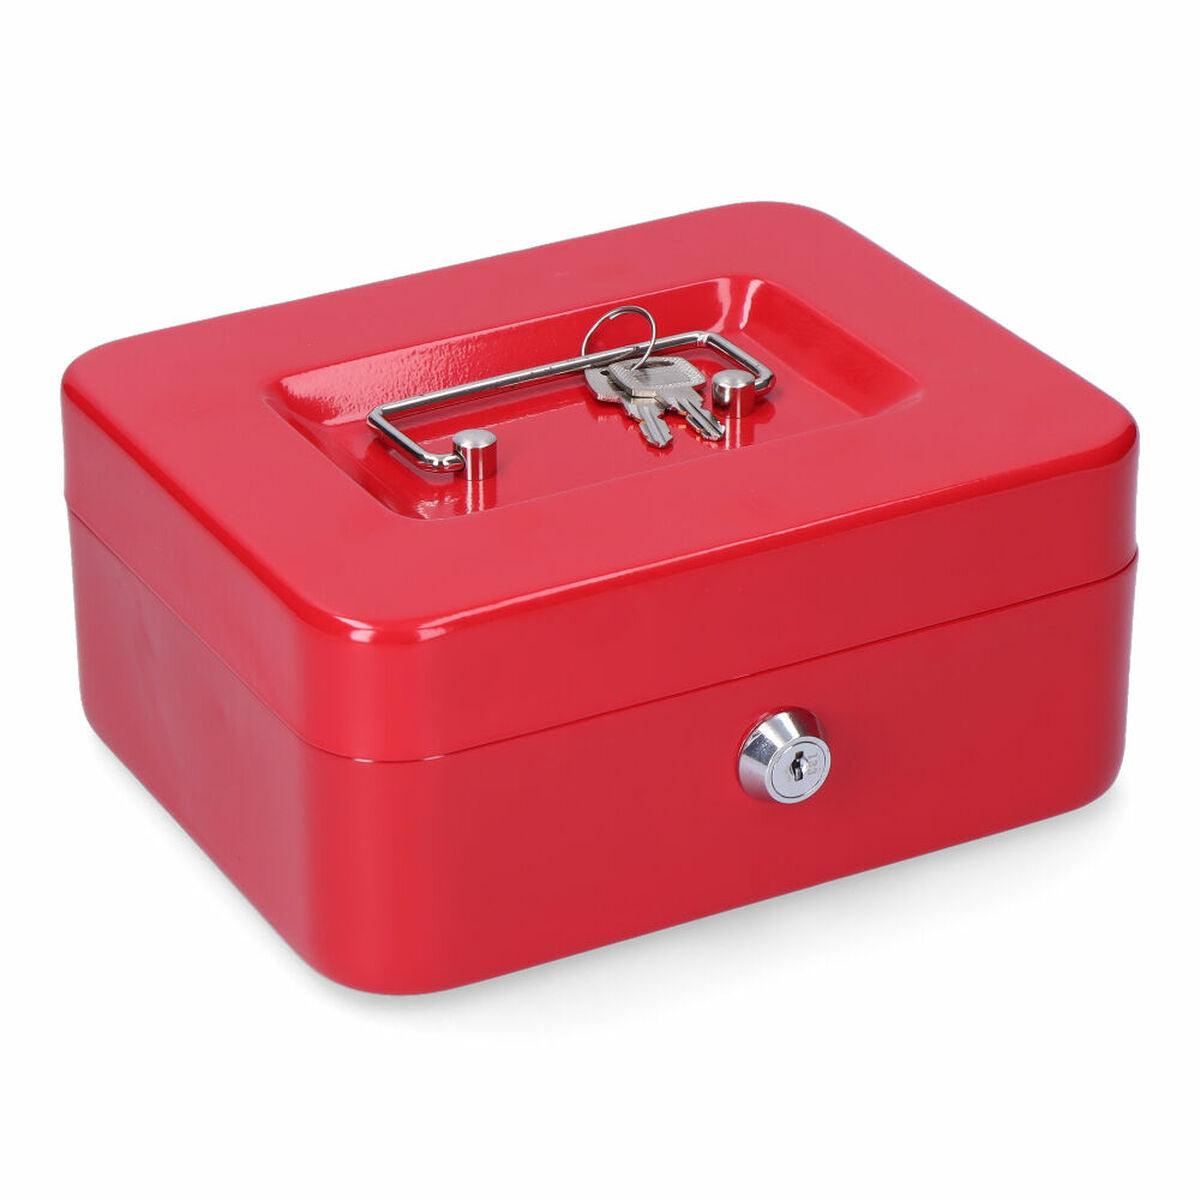 Safe-deposit box Micel CFC09 M13395 20 x 16 x 9 cm Red Steel - Sterilamo